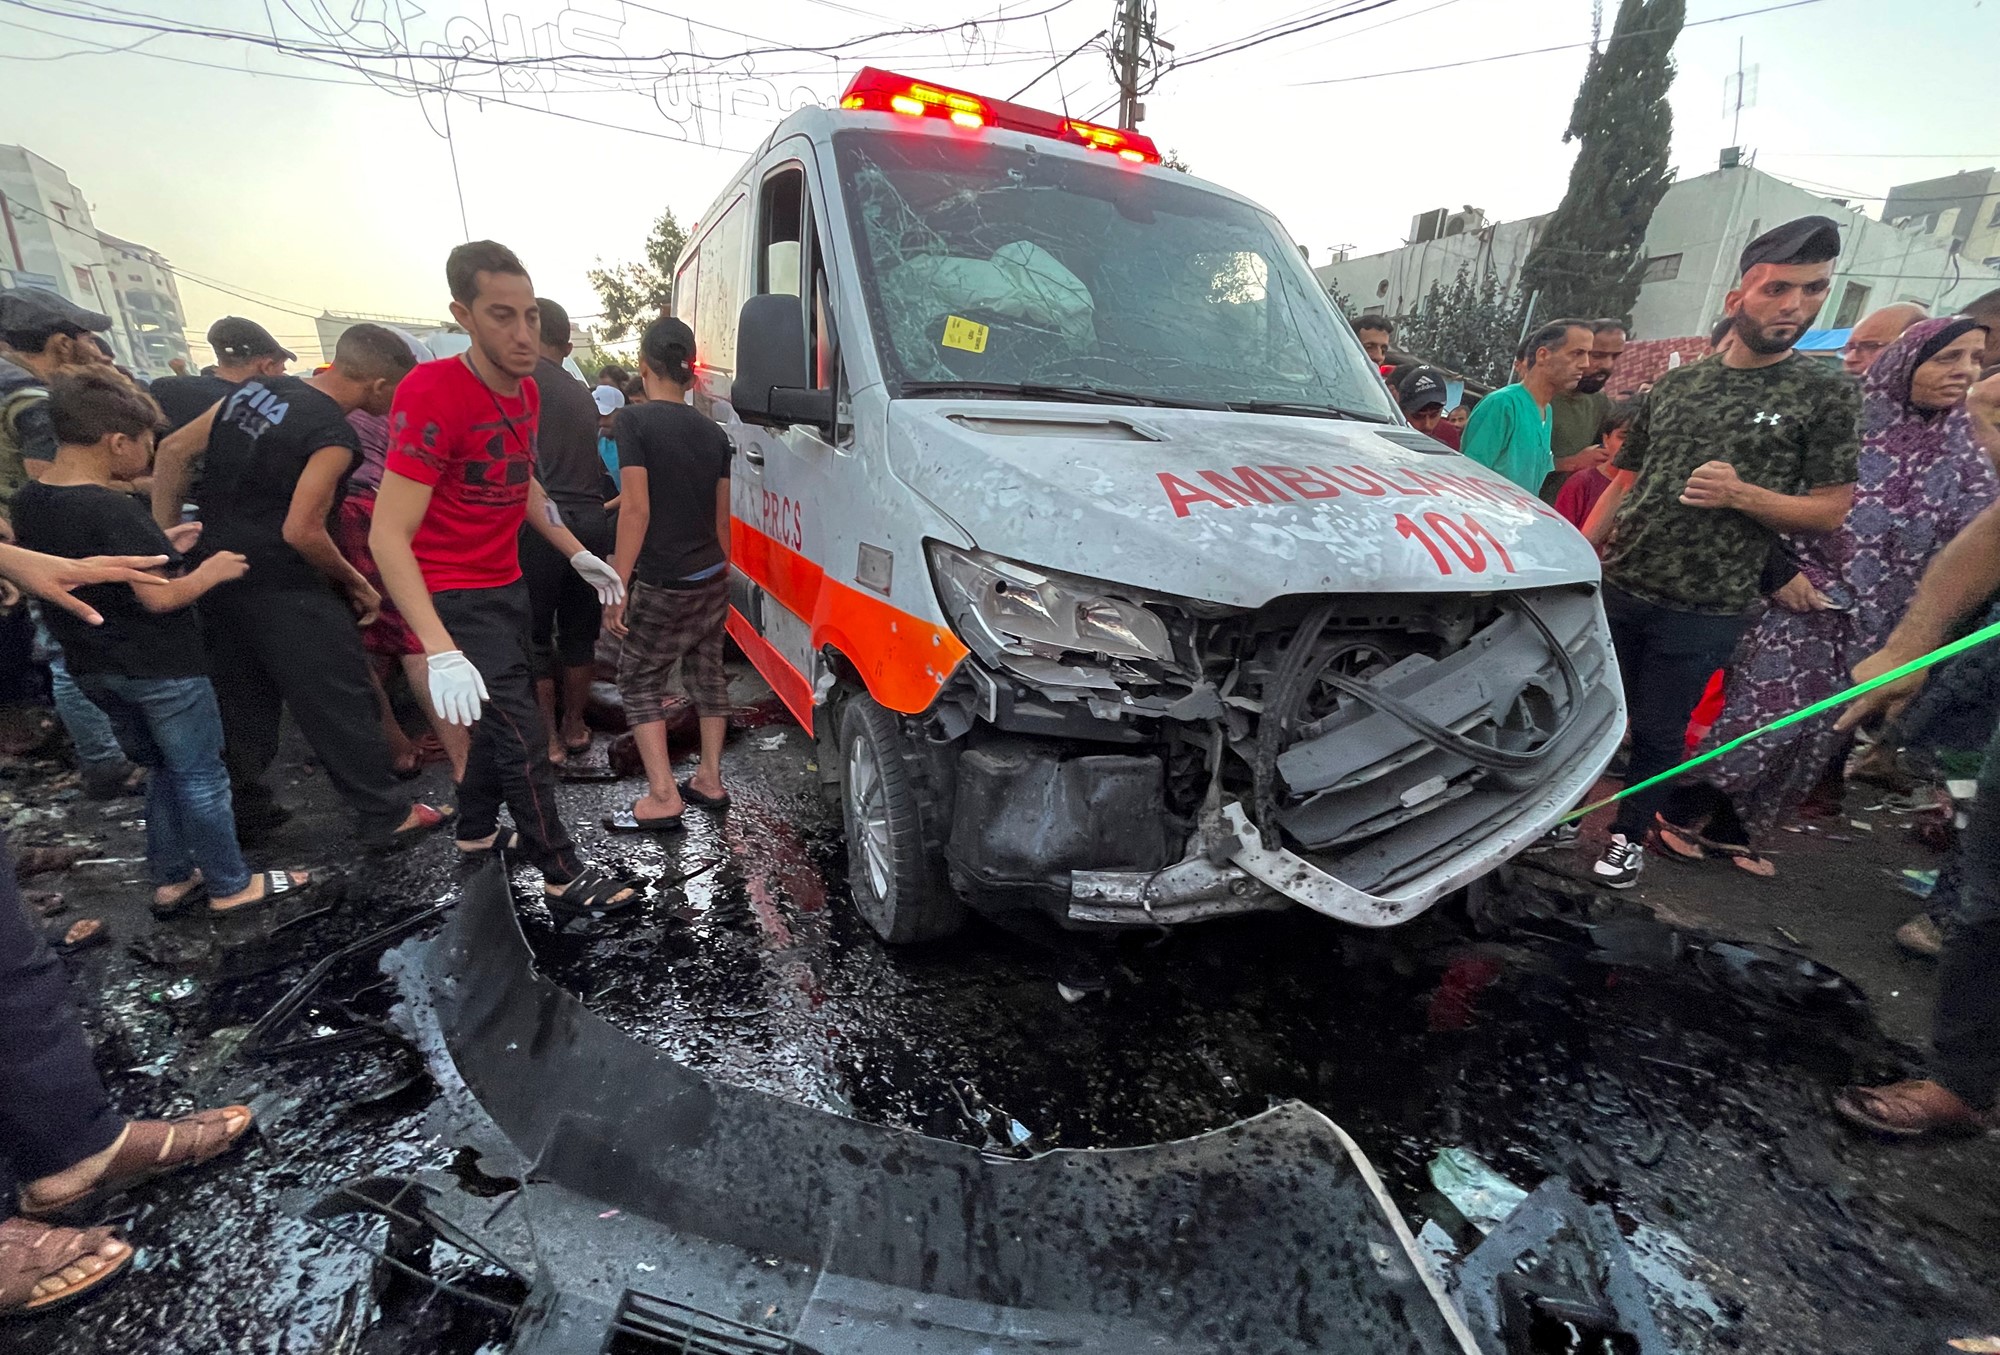 Young Palestinian men gather around a wrecked ambulance.